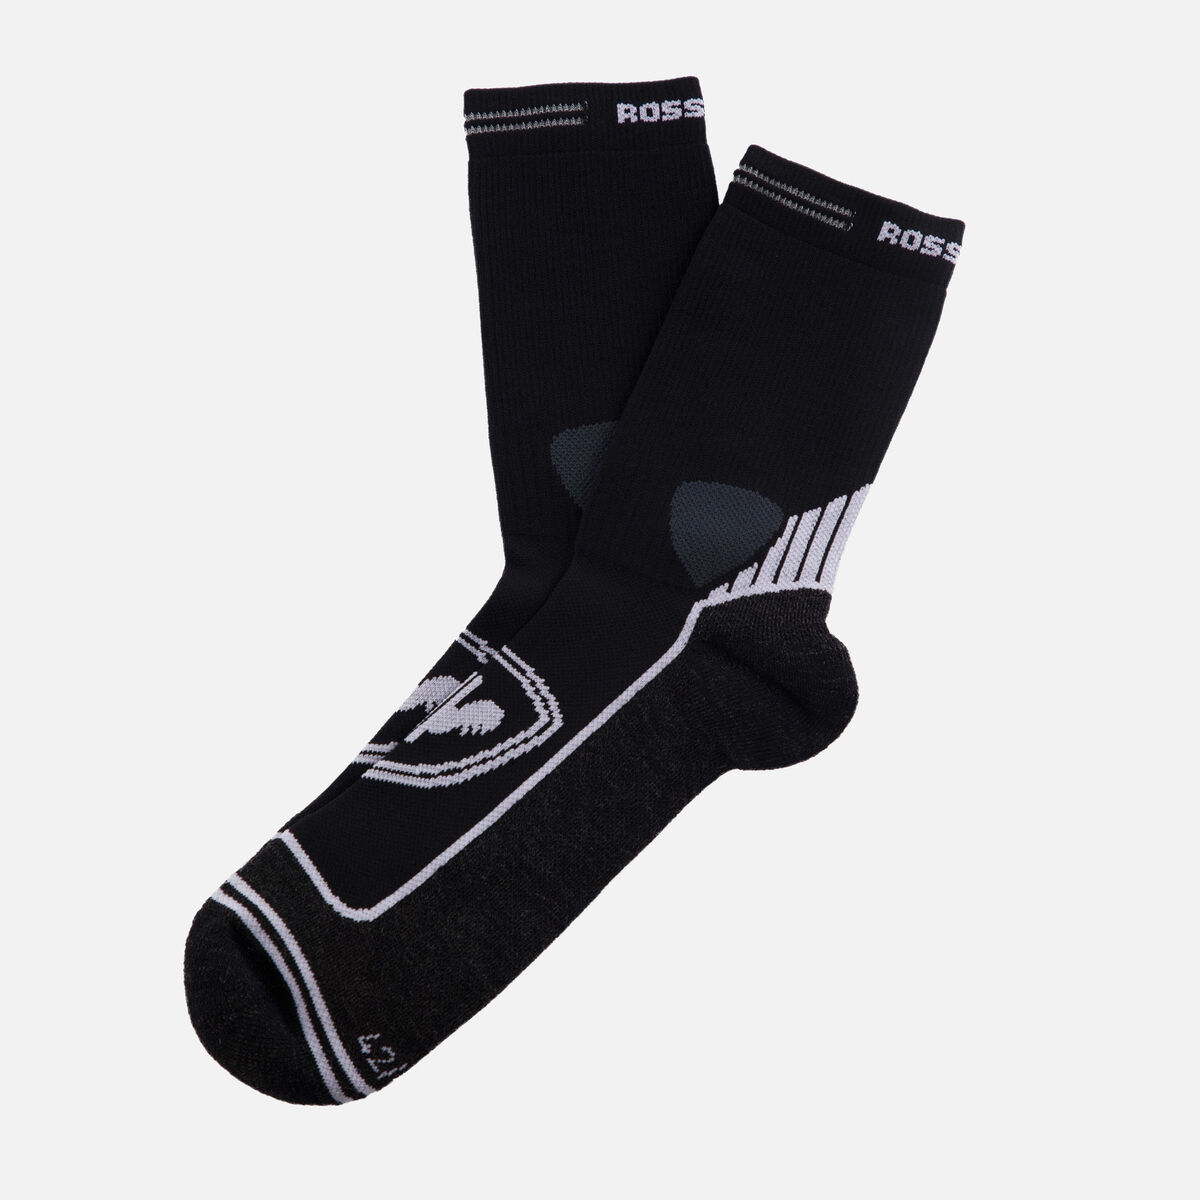 Rossignol Men's hiking socks Black